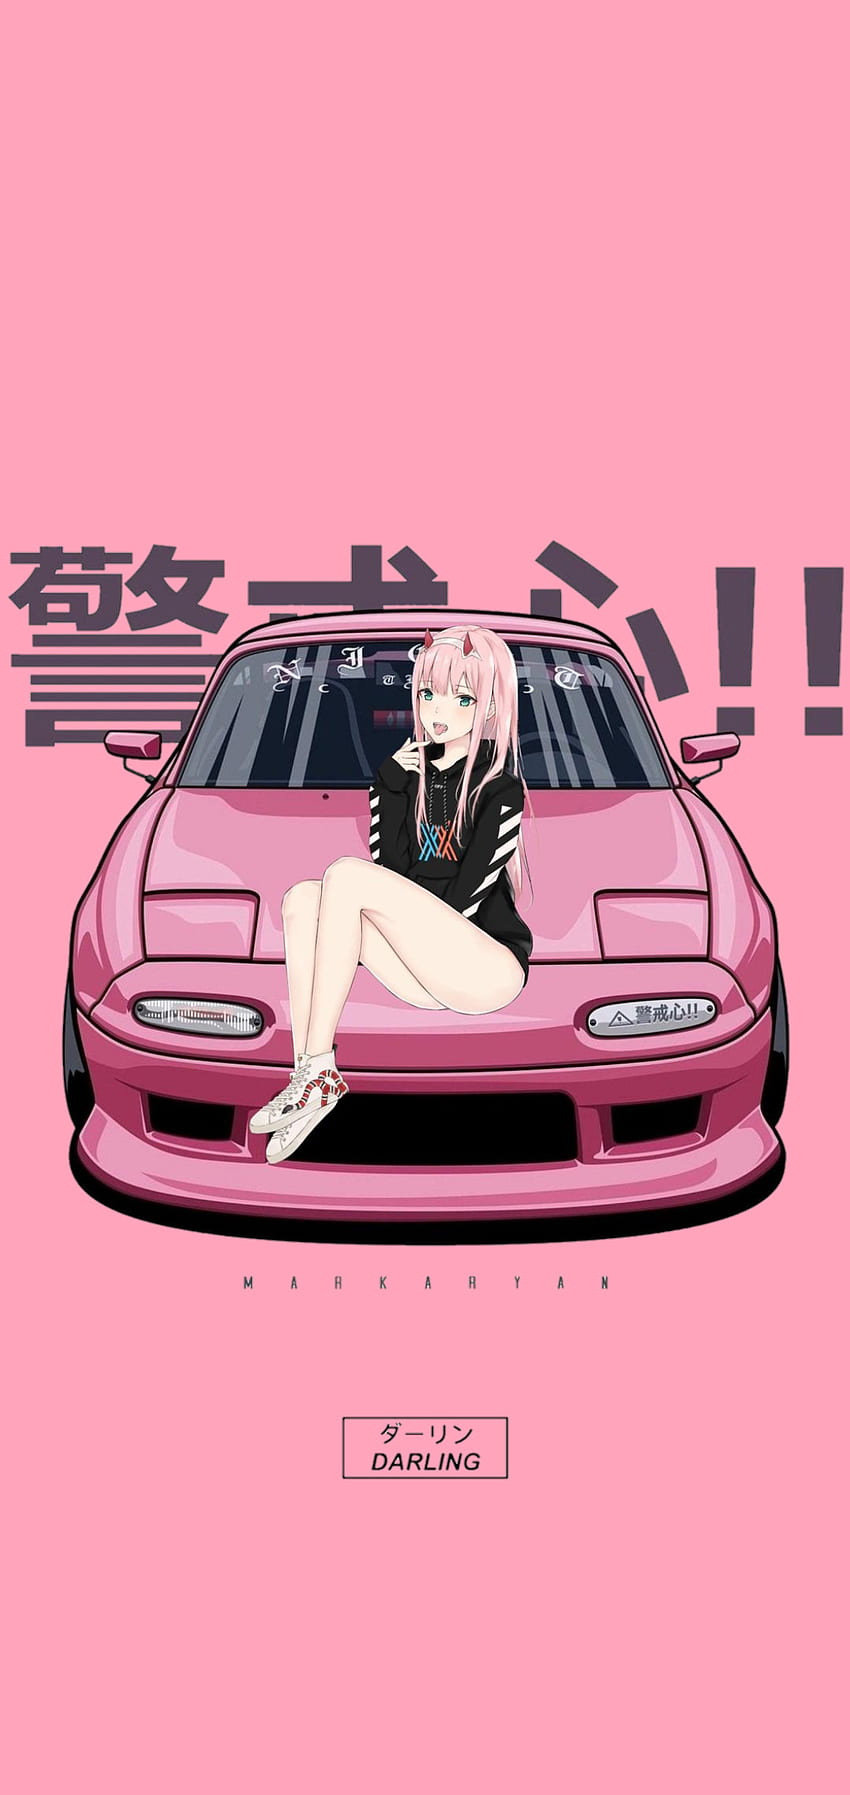 anime girls on jdm cars｜TikTok Search